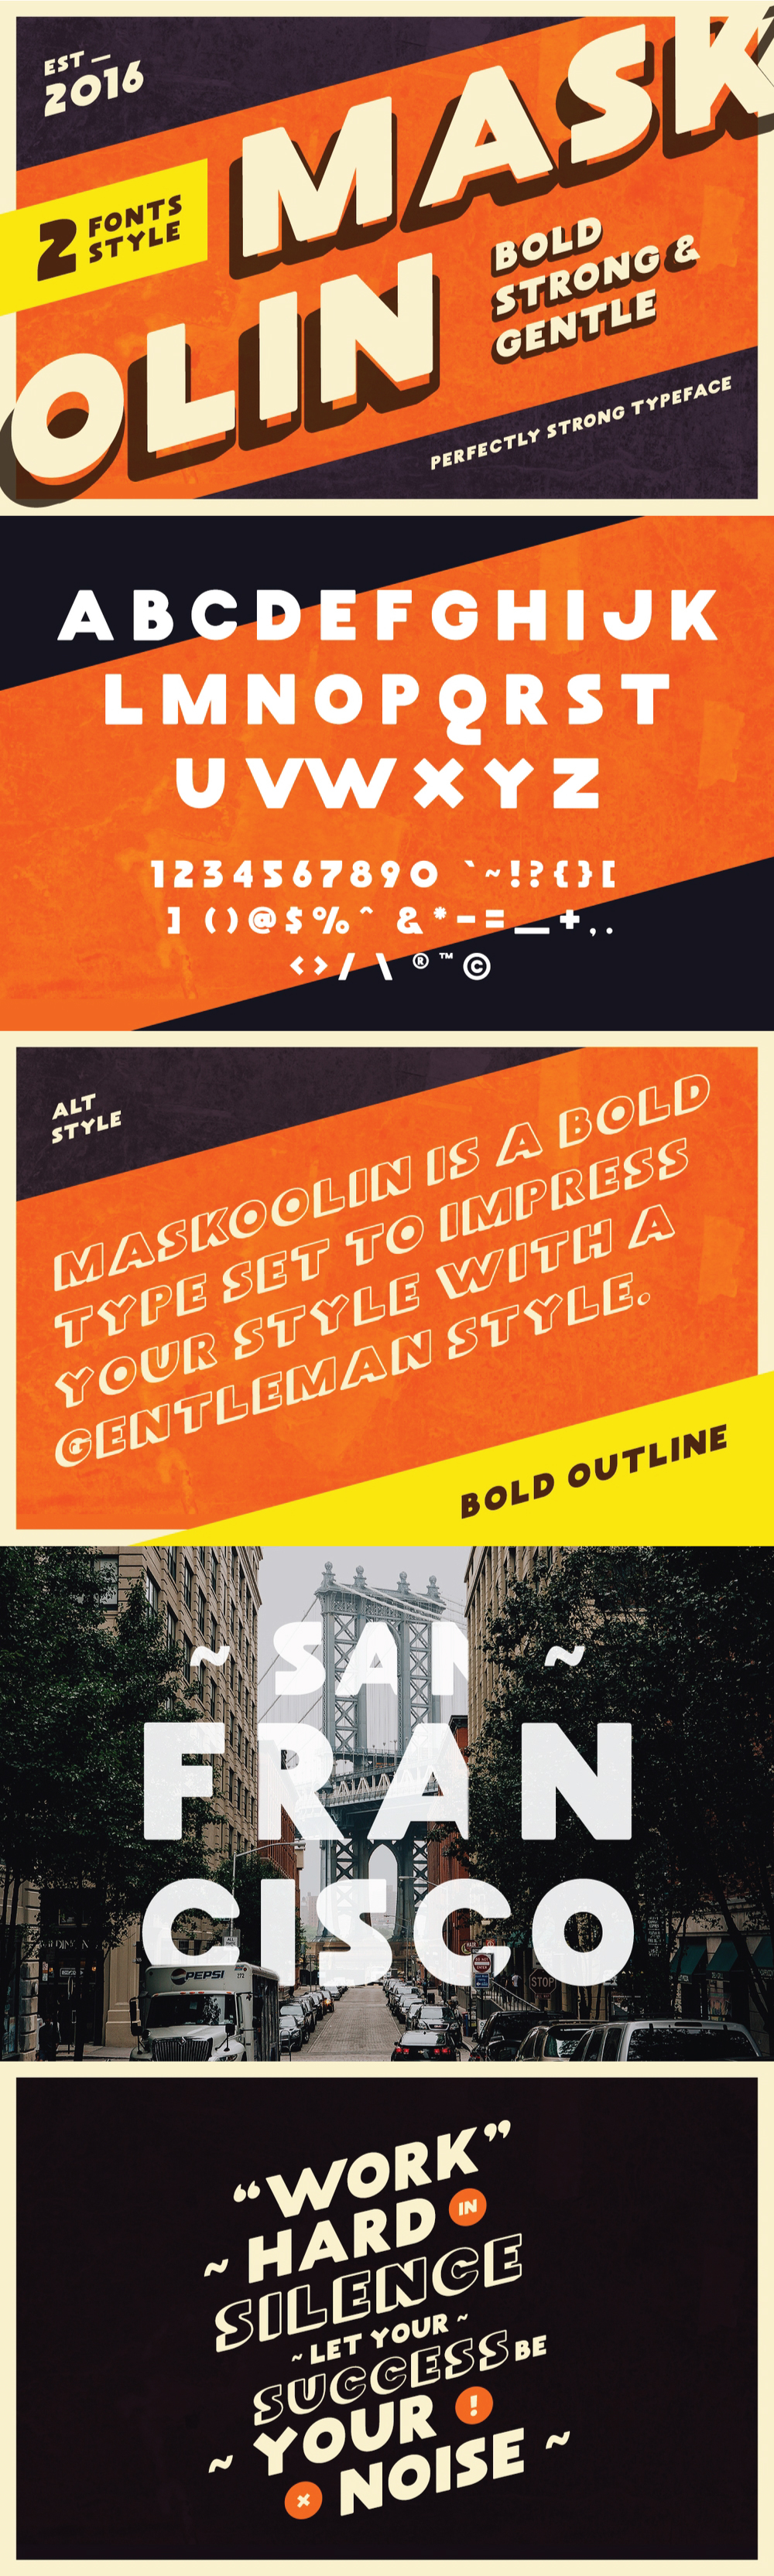 Free font free freebie free fonts type Typeface free typeface bold Display font